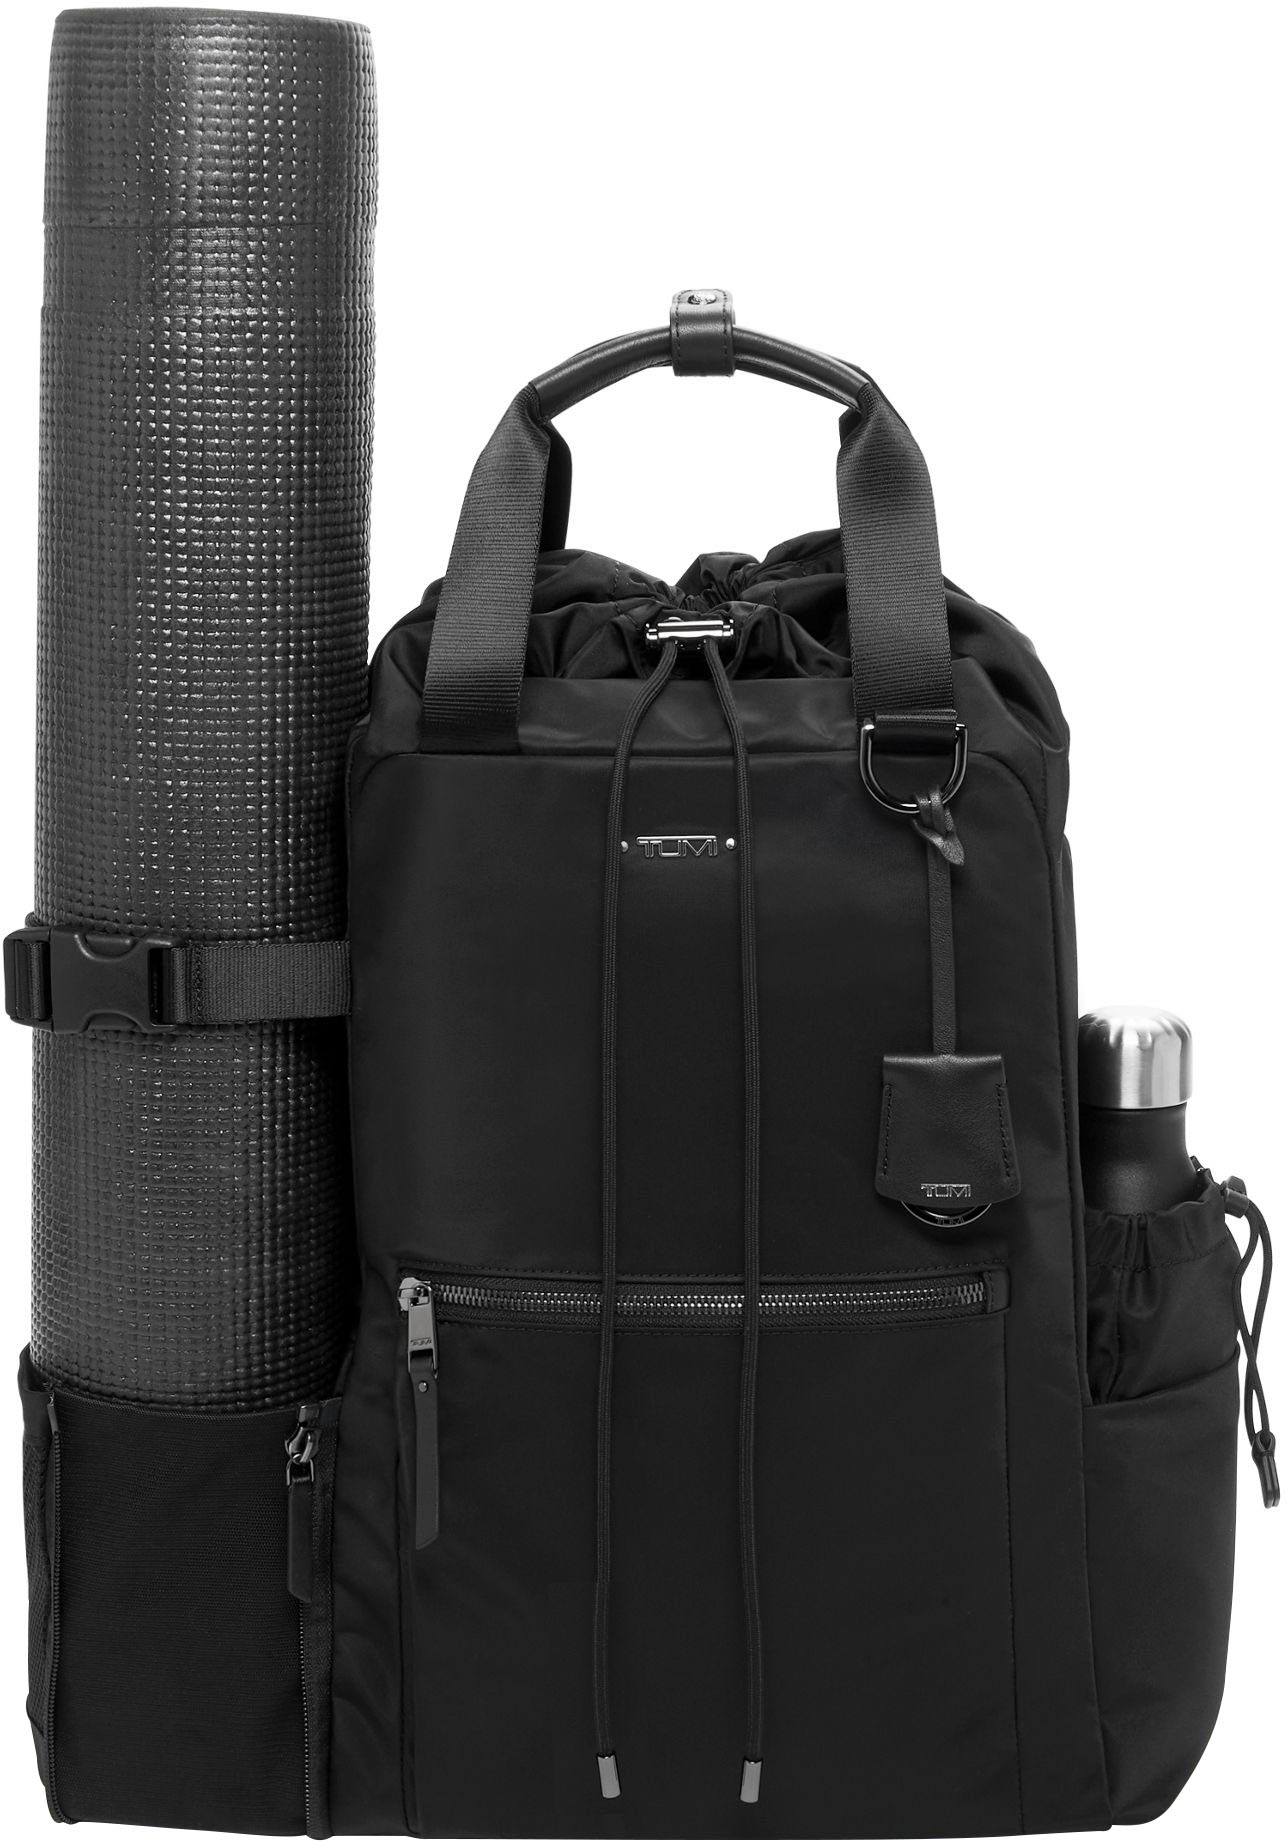 Angle View: TUMI - Voyageur Fern Drawstring Backpack - Black